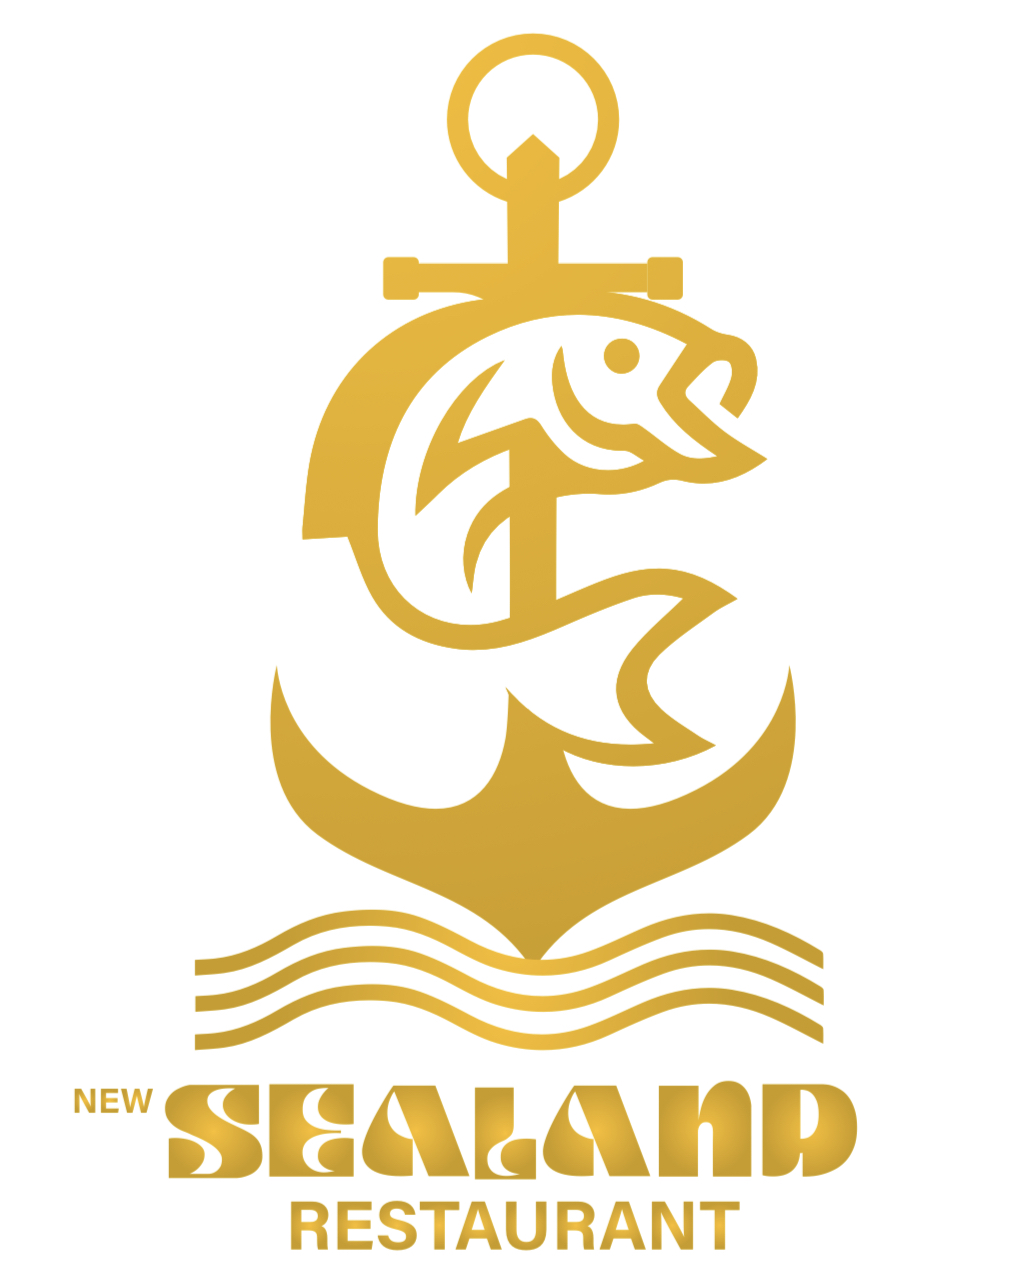 New Sealand Restaurant 